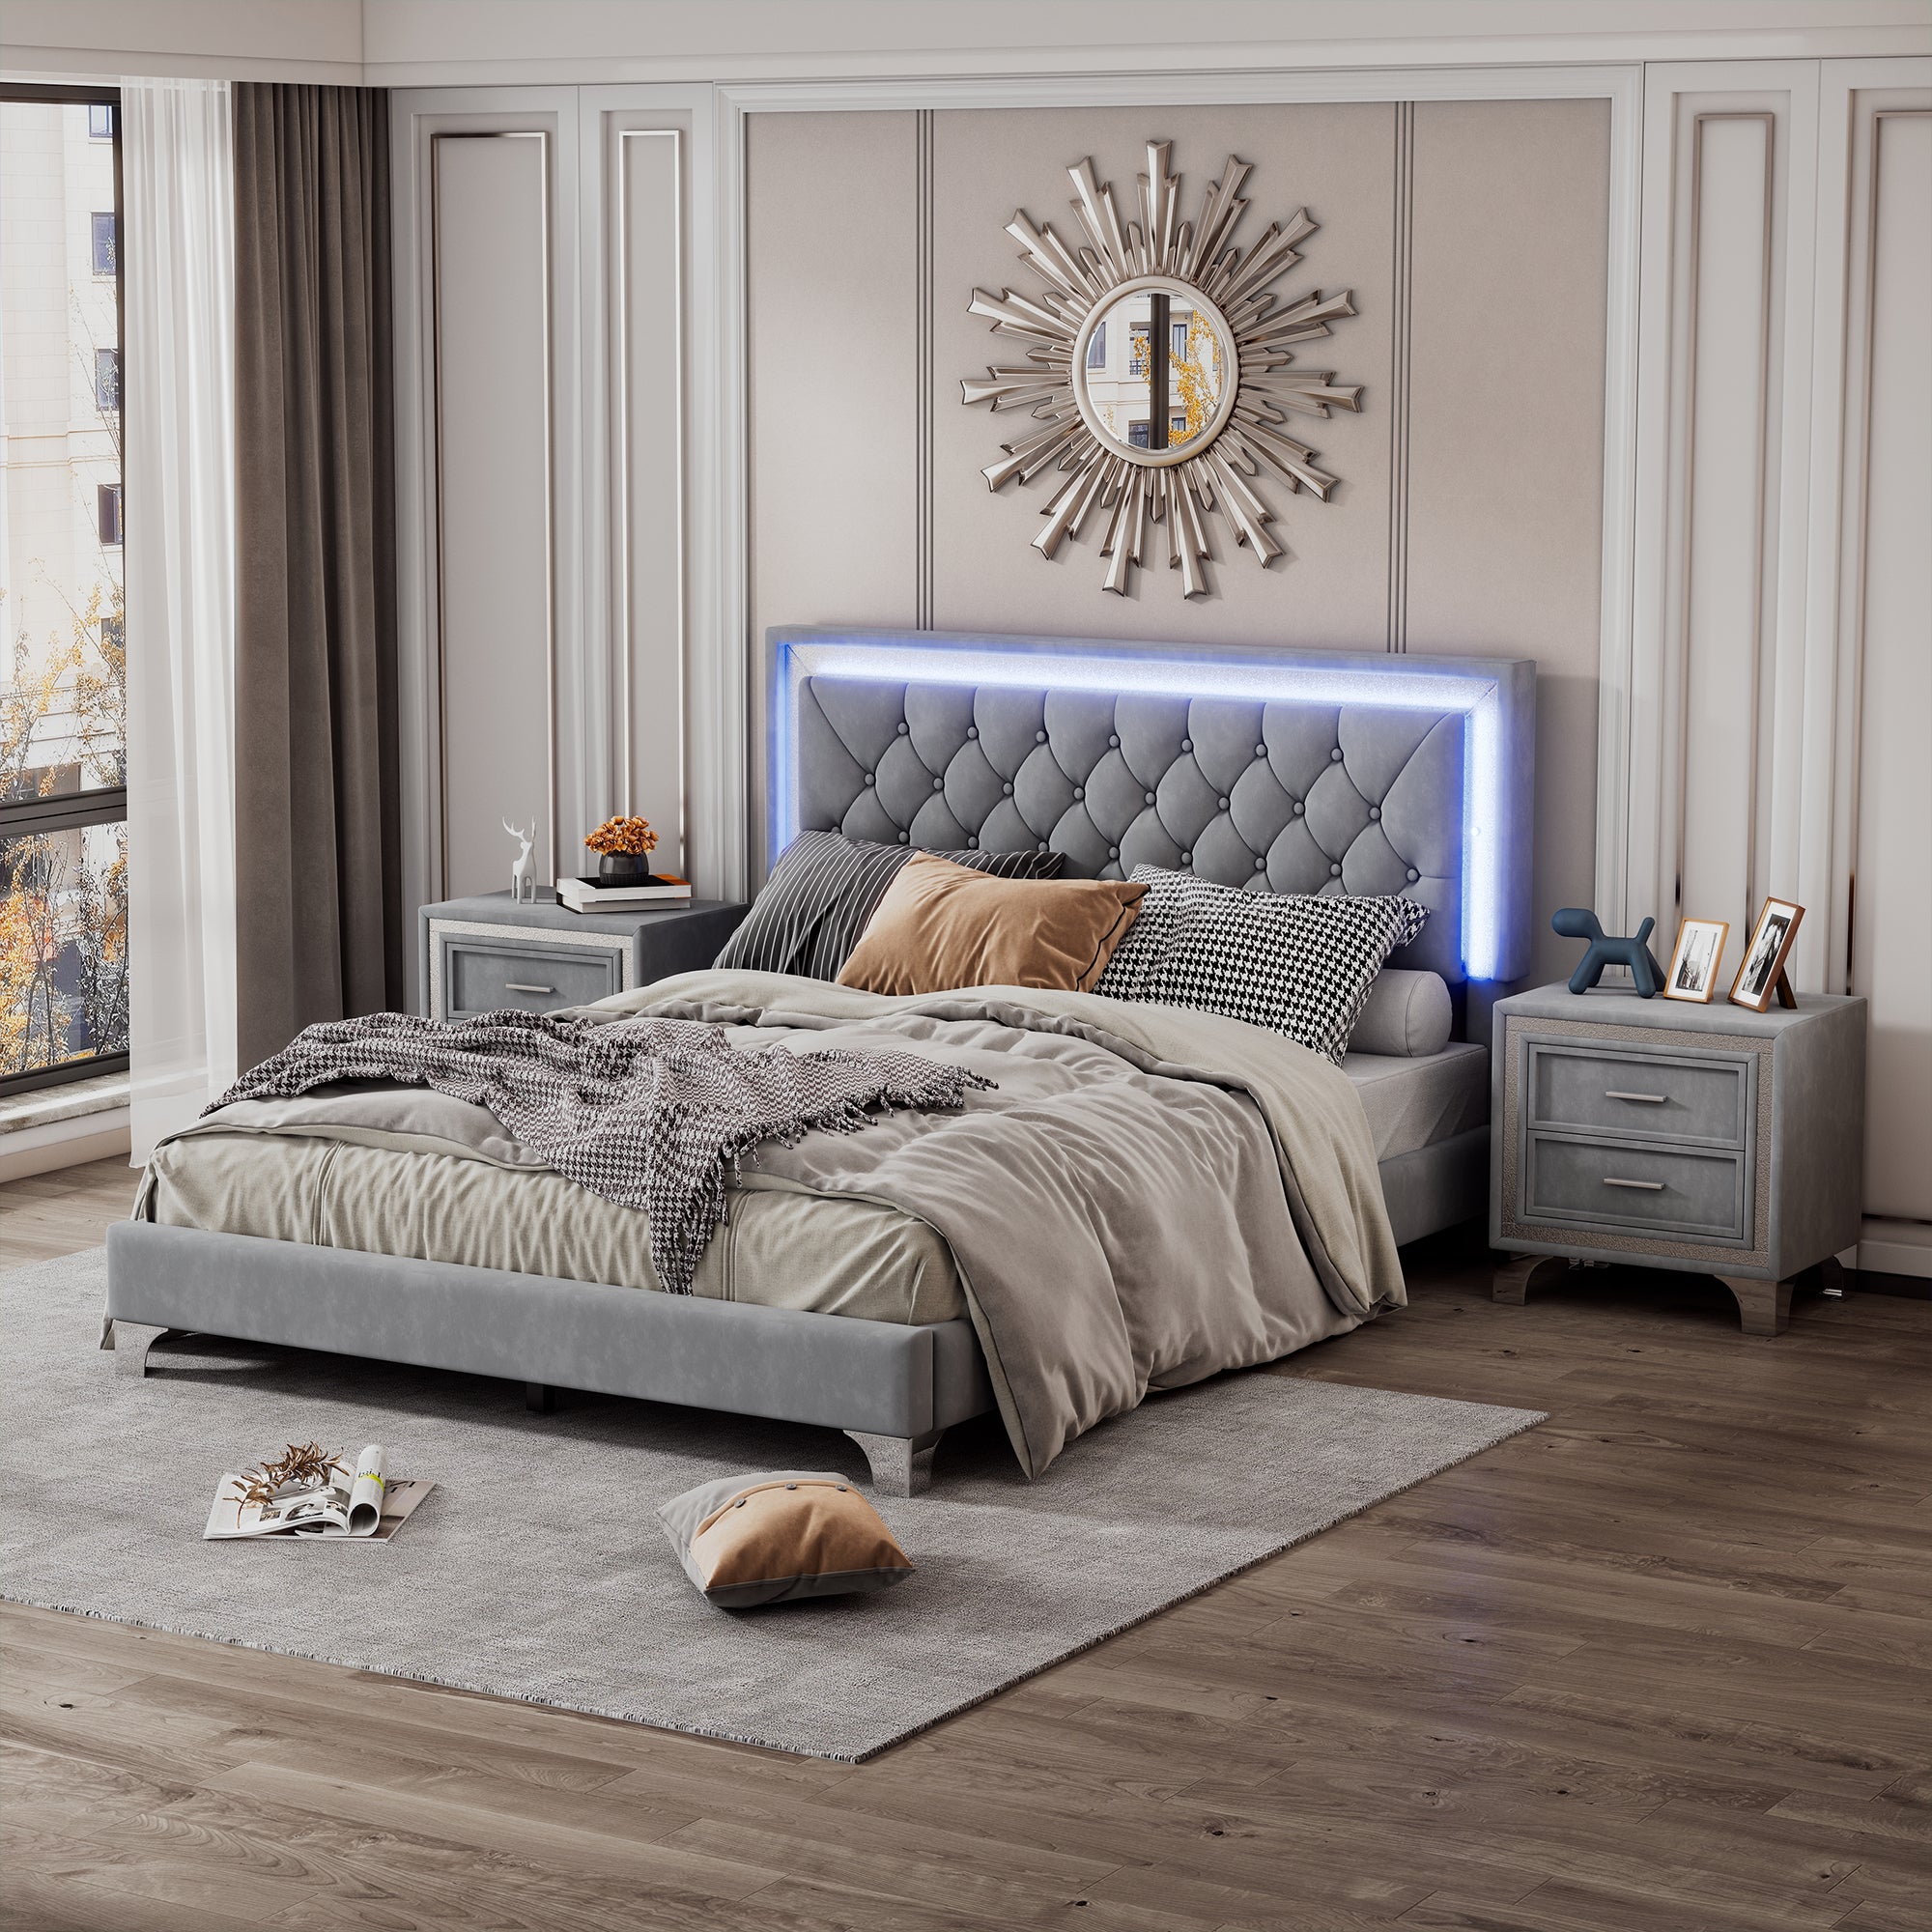 Tiffani 3 Piece Bedroom Set, Queen Size Velvet Upholstered Platform Bed with LED Lights and Two Nightstands